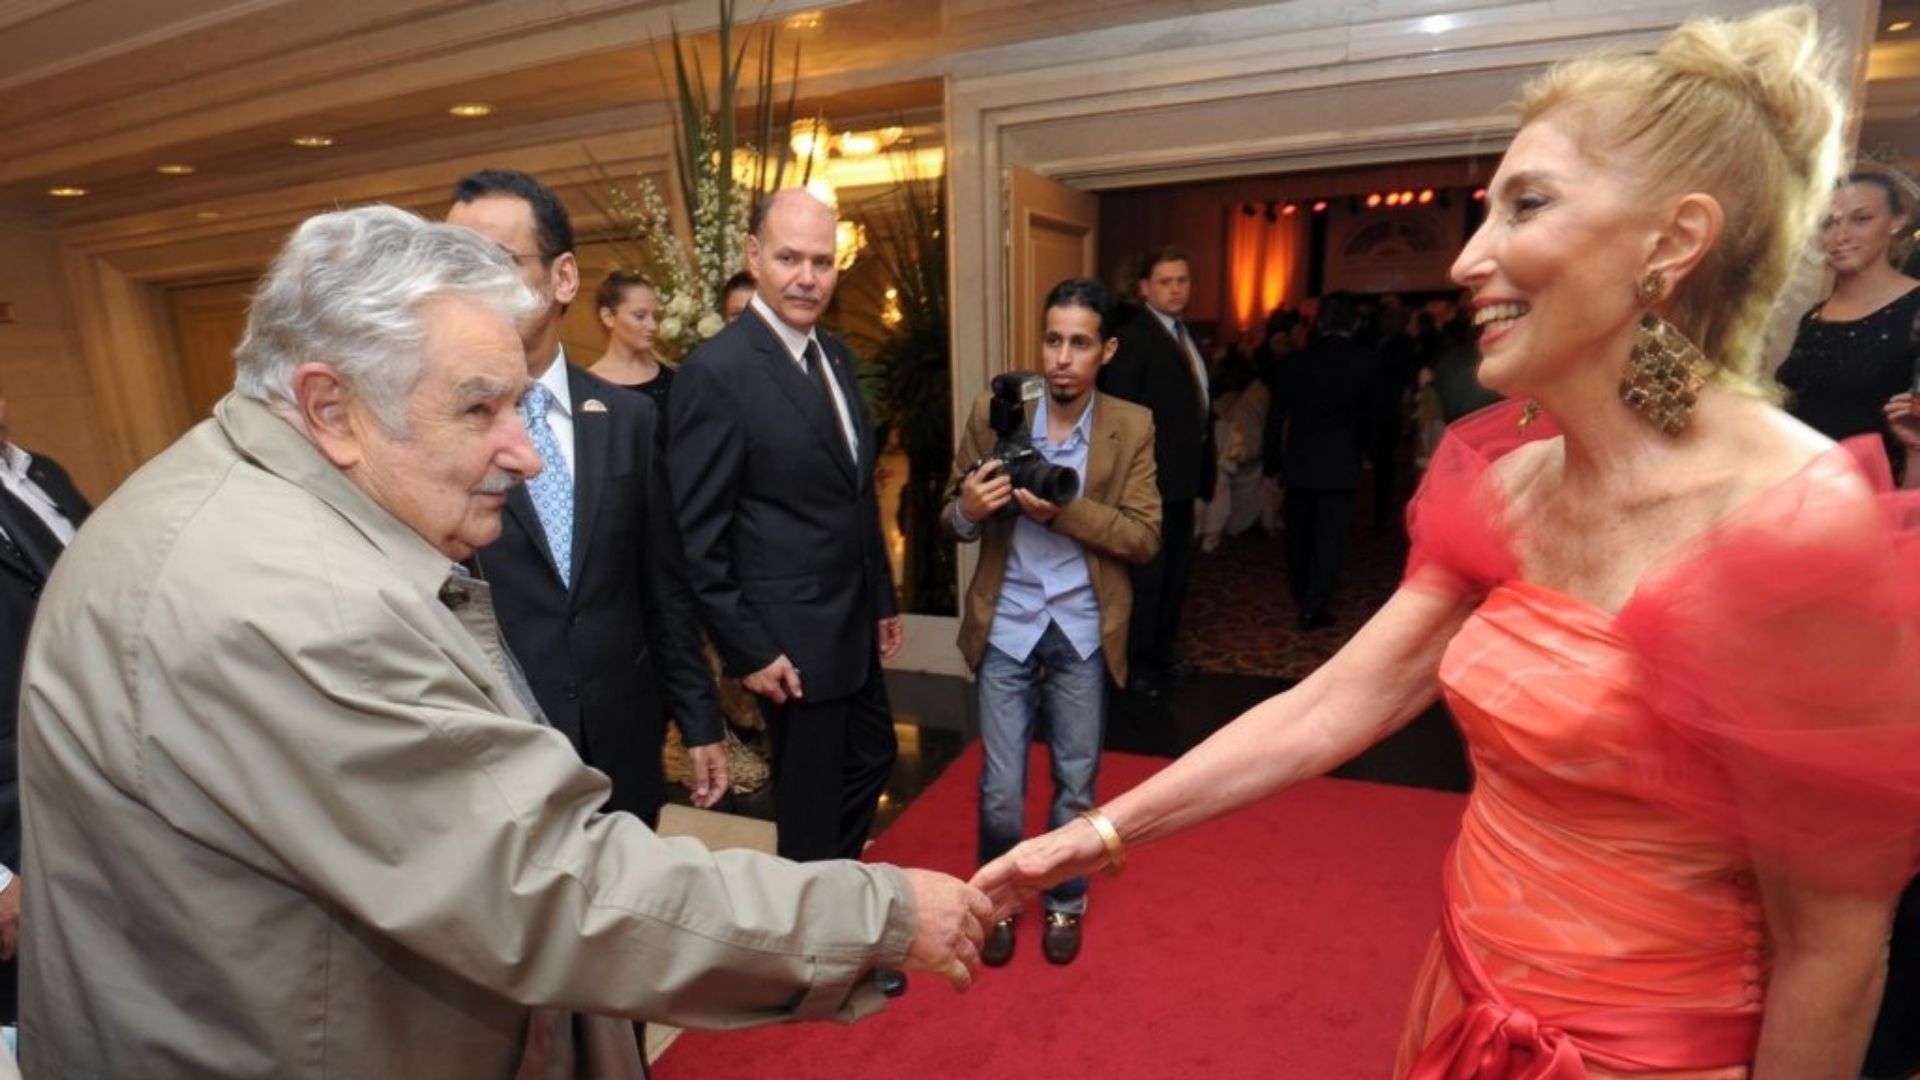 Prince Talal International Prize for Human Development 2012